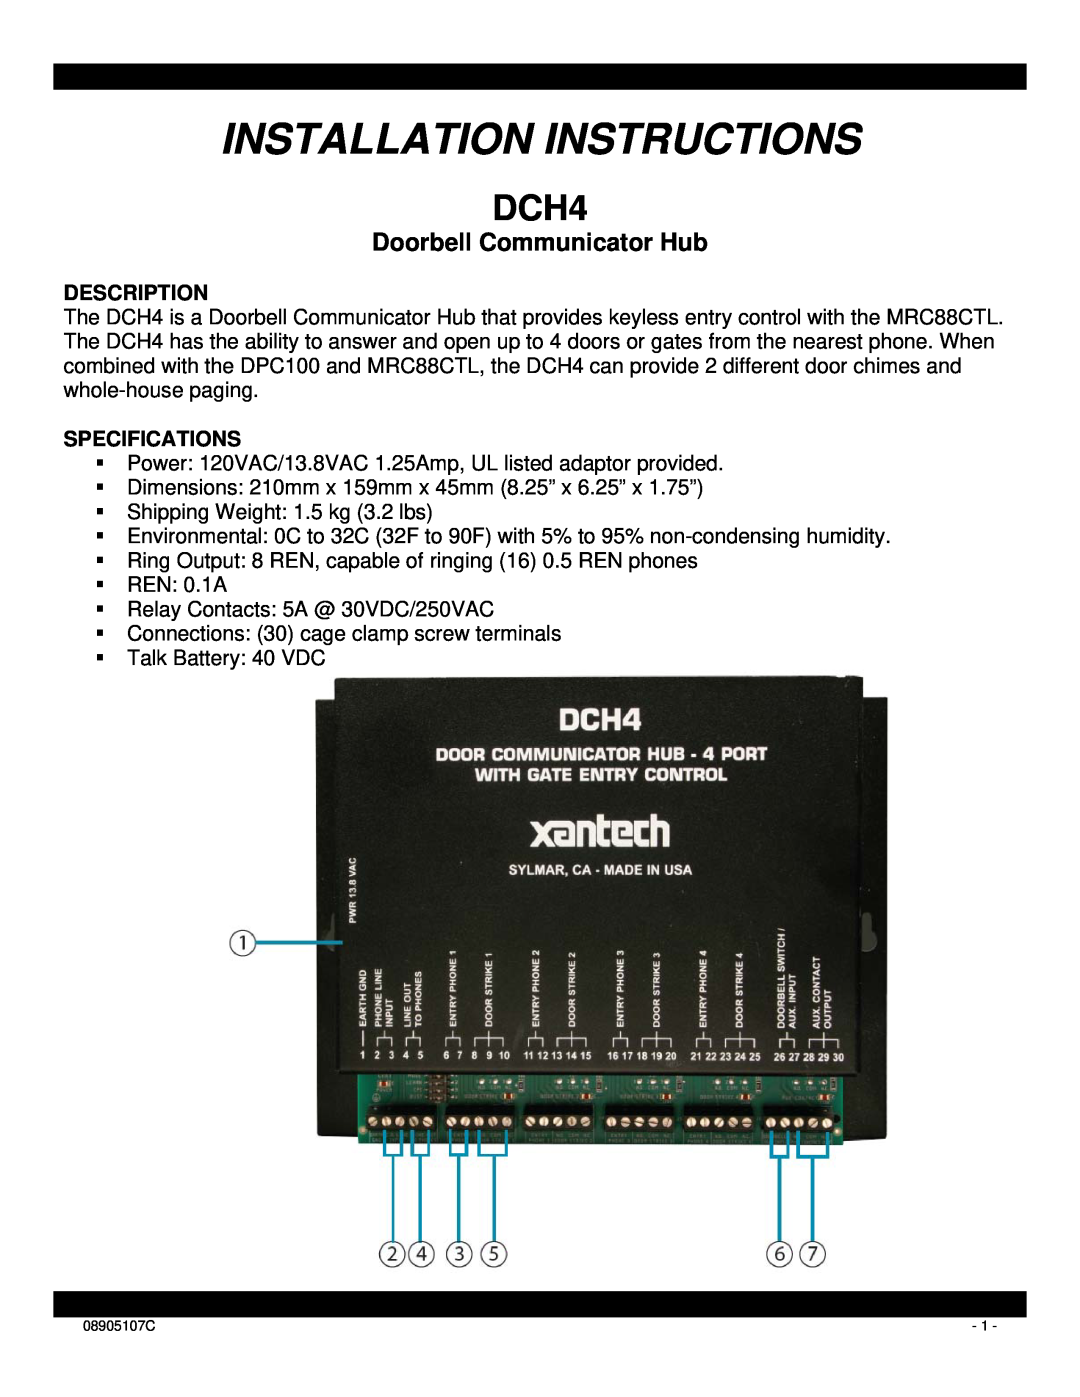 Xantech DCH4 installation instructions Description, Specifications, Installation Instructions, Doorbell Communicator Hub 